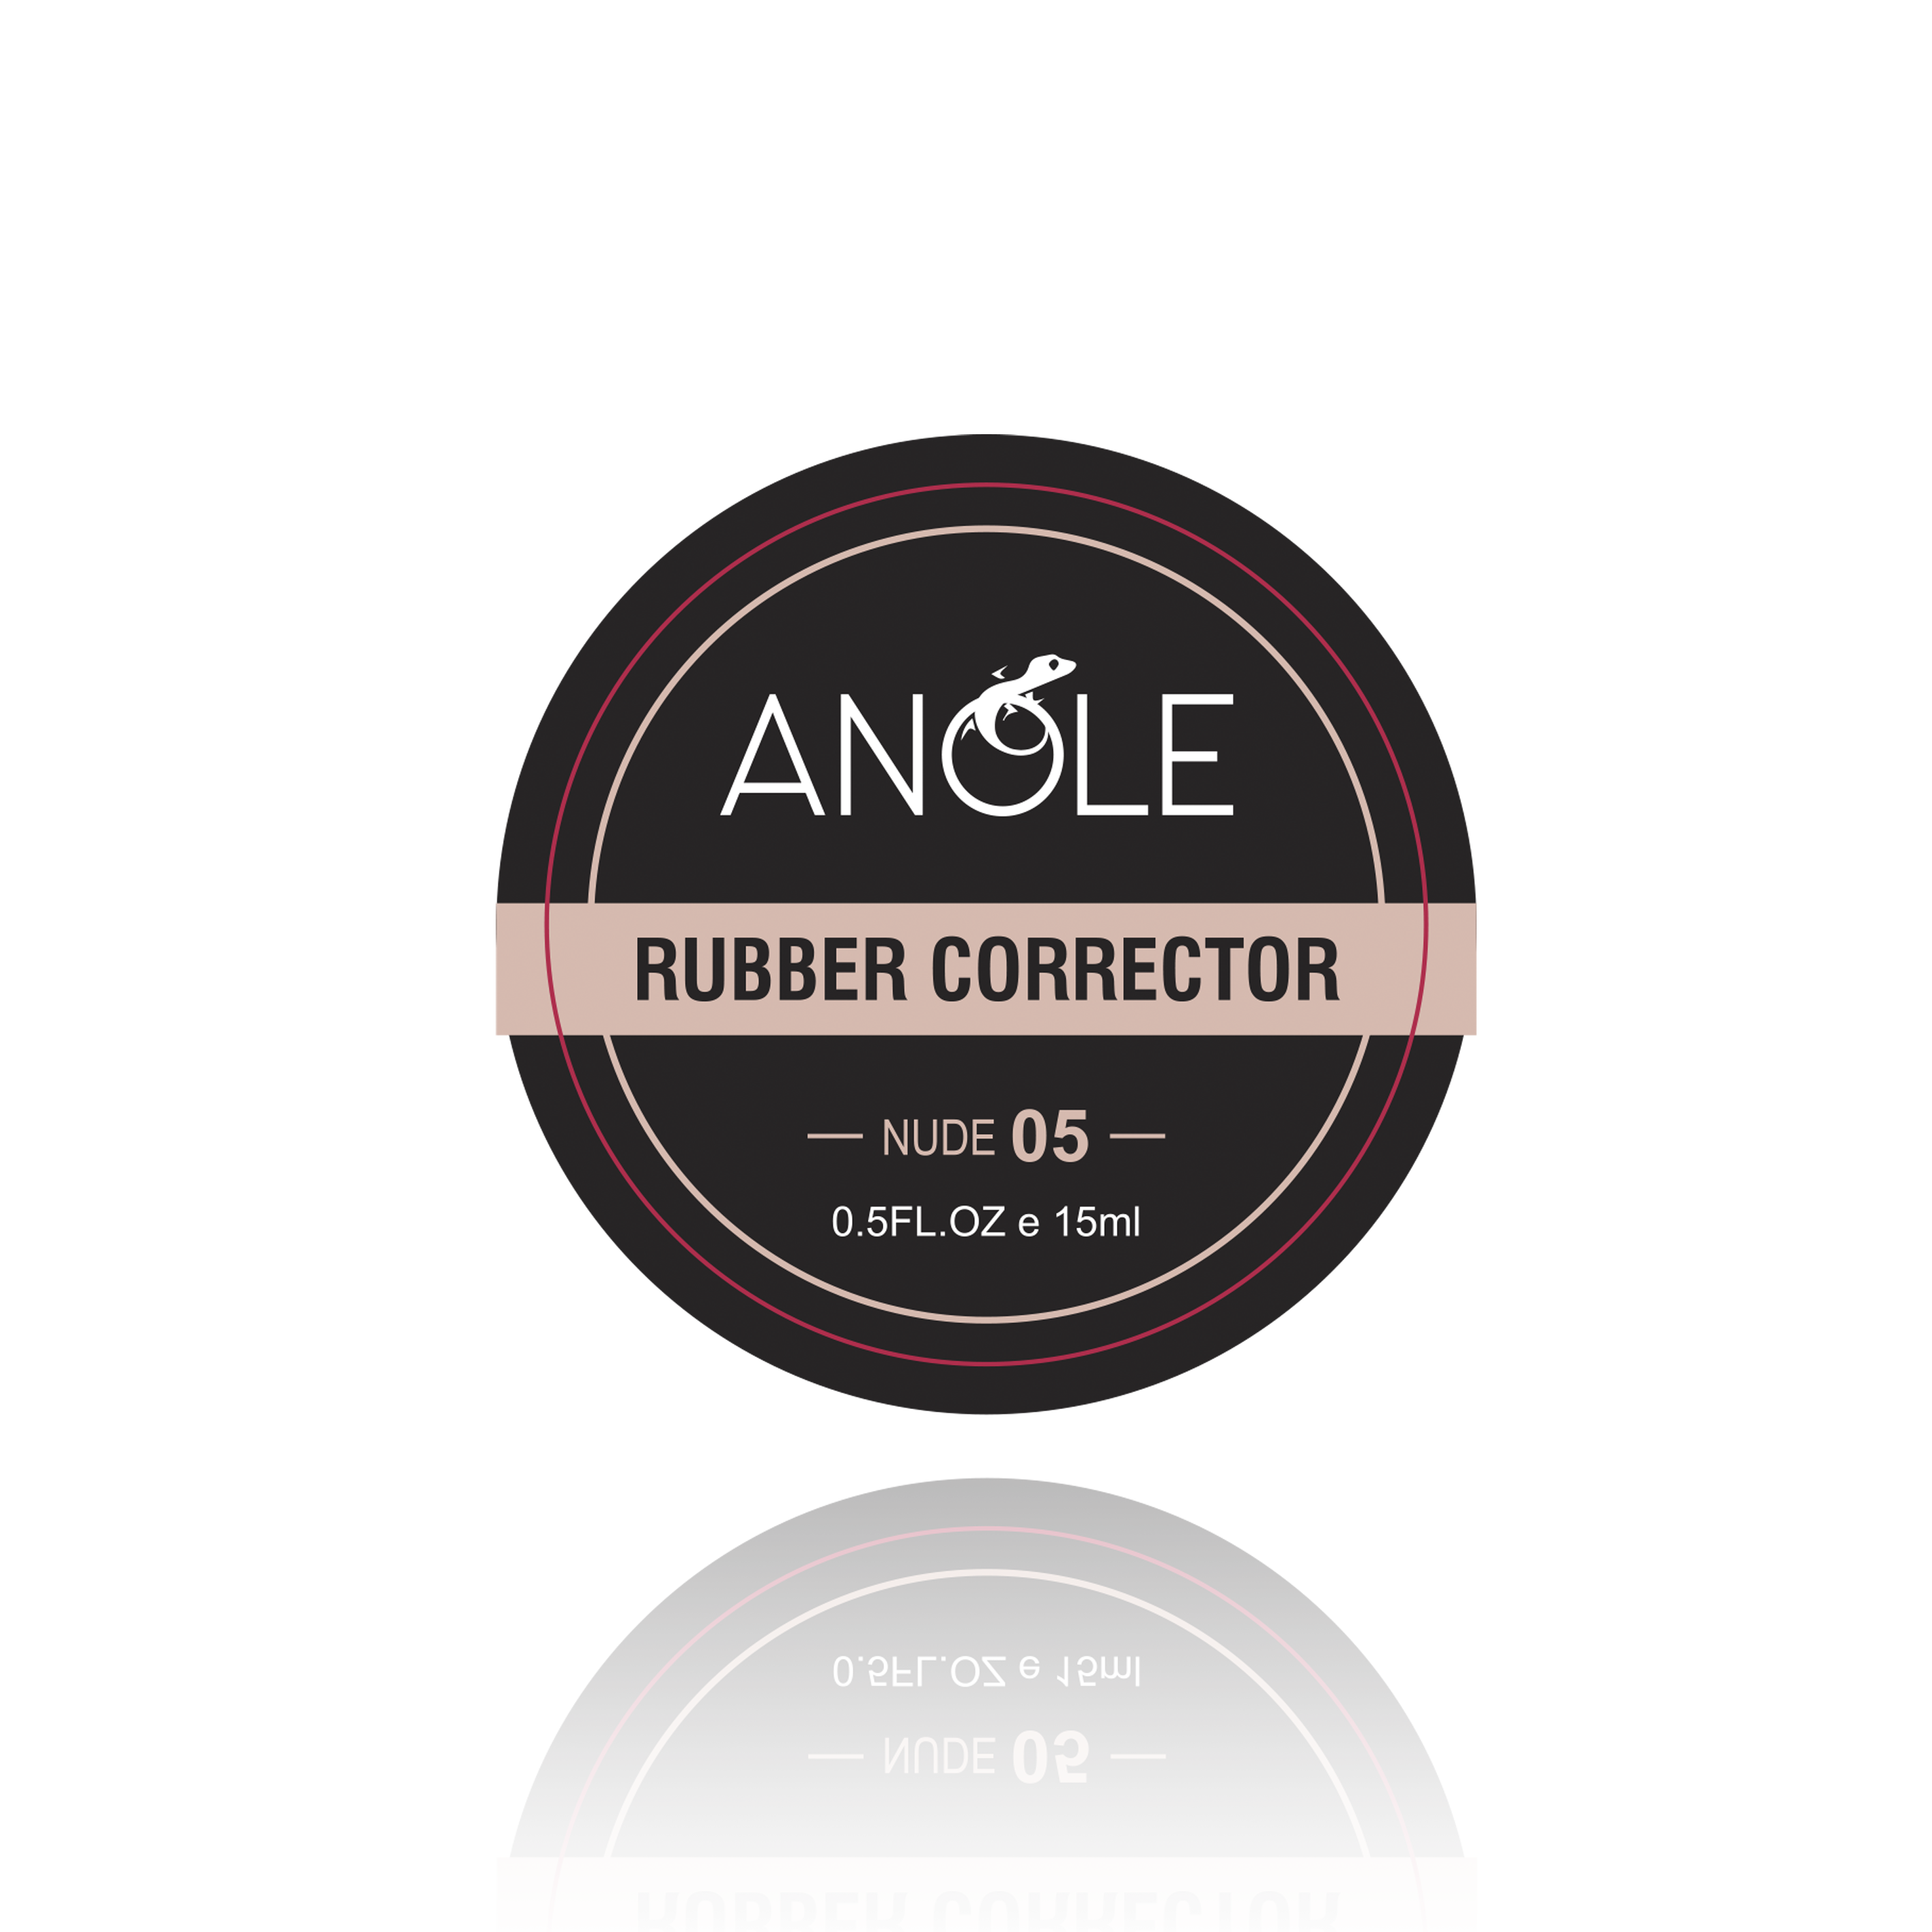 anole rubber corrector nude 5